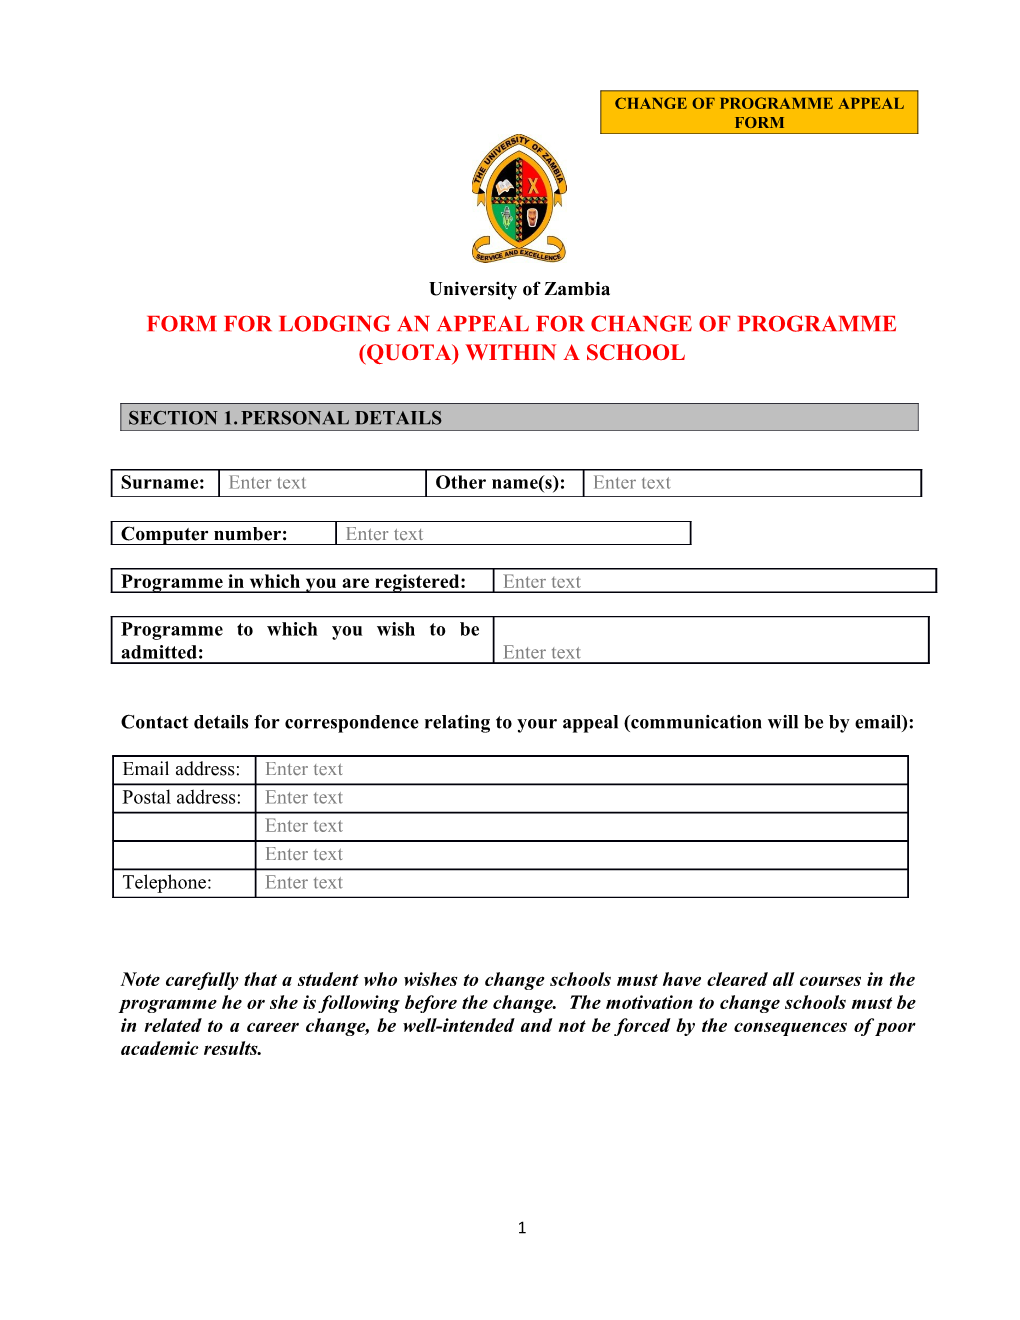 Change of Programme Appeal Form